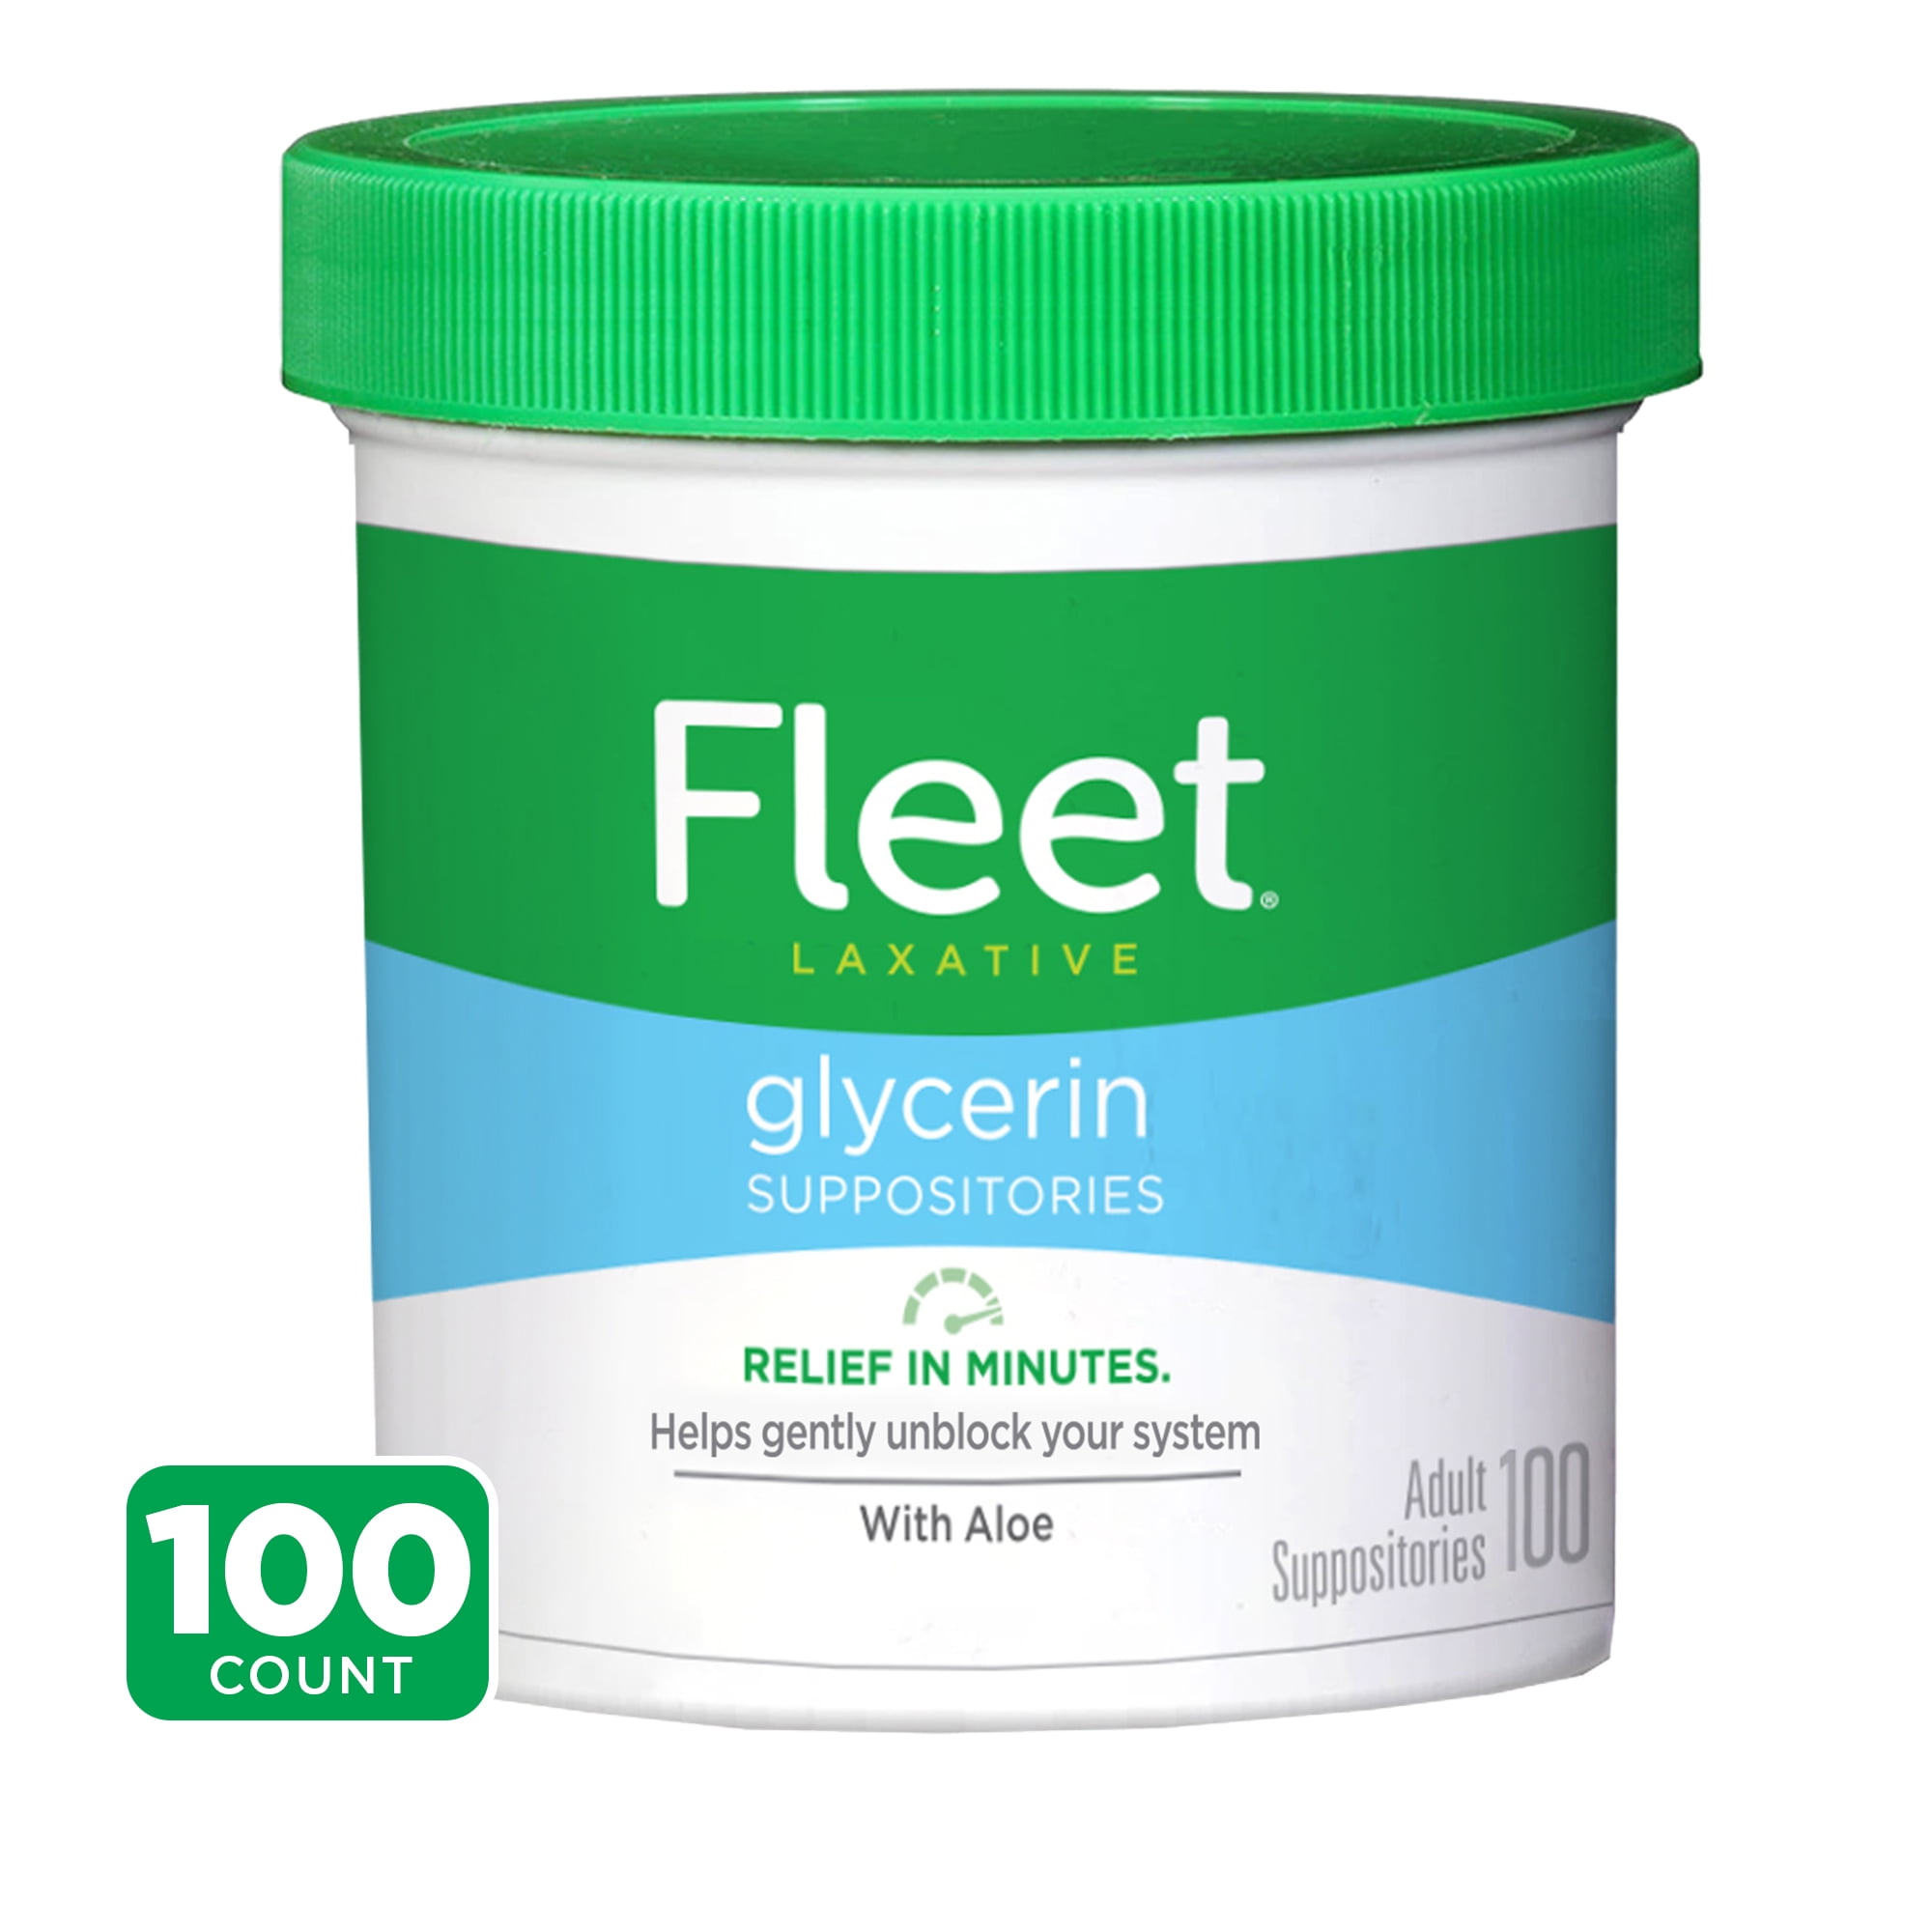 Fleet - Glycerin Suppositories, Laxative, Adult Jar, 100 Each